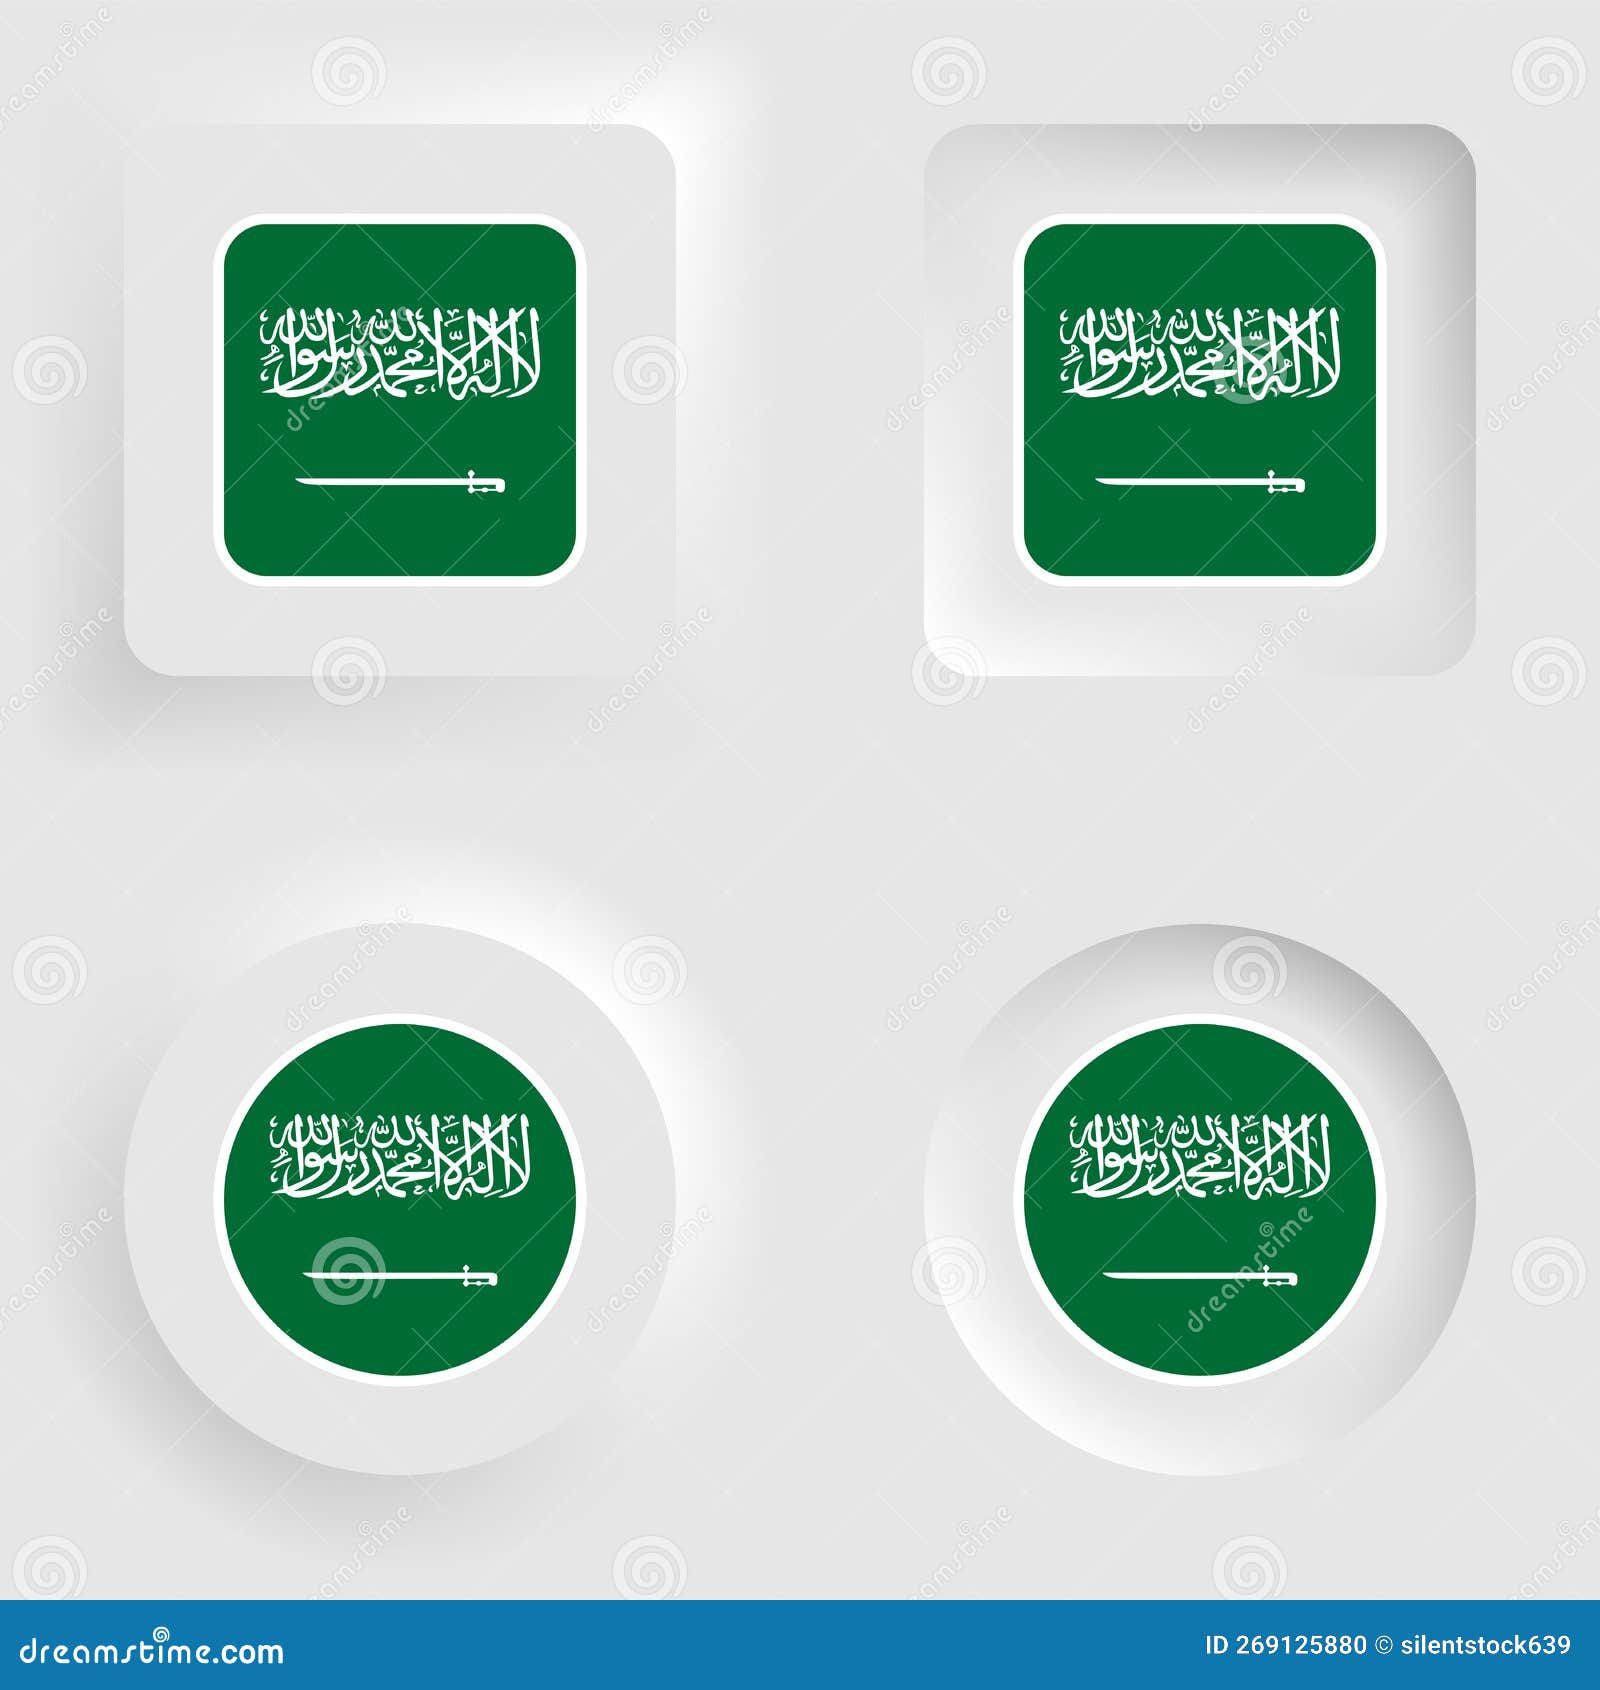 saudiarabia neumorphic graphic and label set